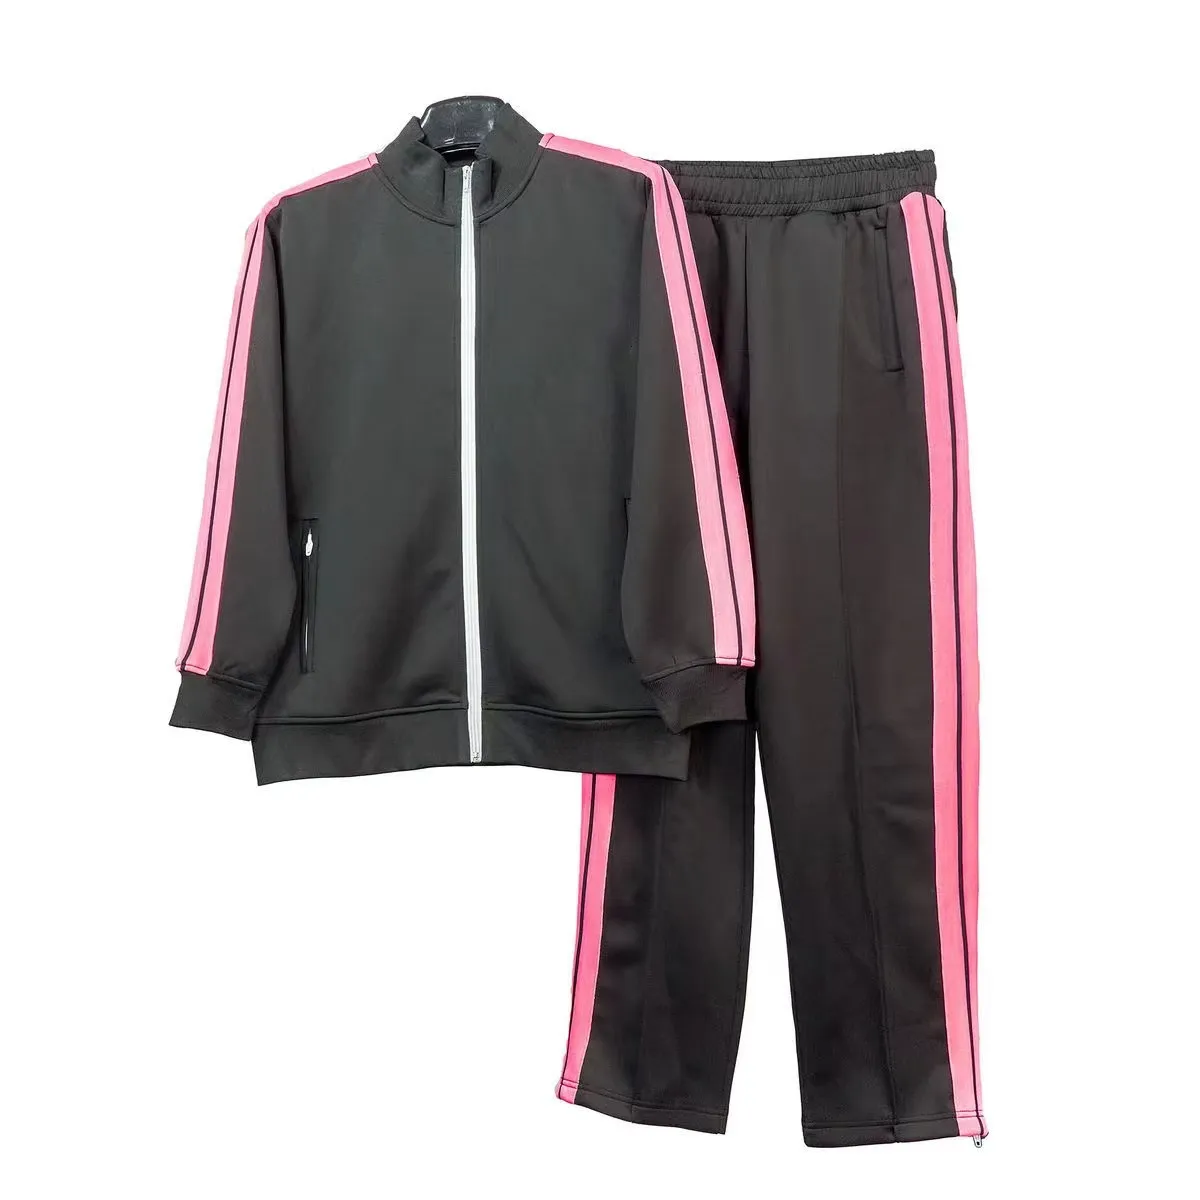 Fatos de treino femininos collants opacos para ginástica leggings calças de cintura alta Elastic Fitness Lady Outdoor Sport collants plus size